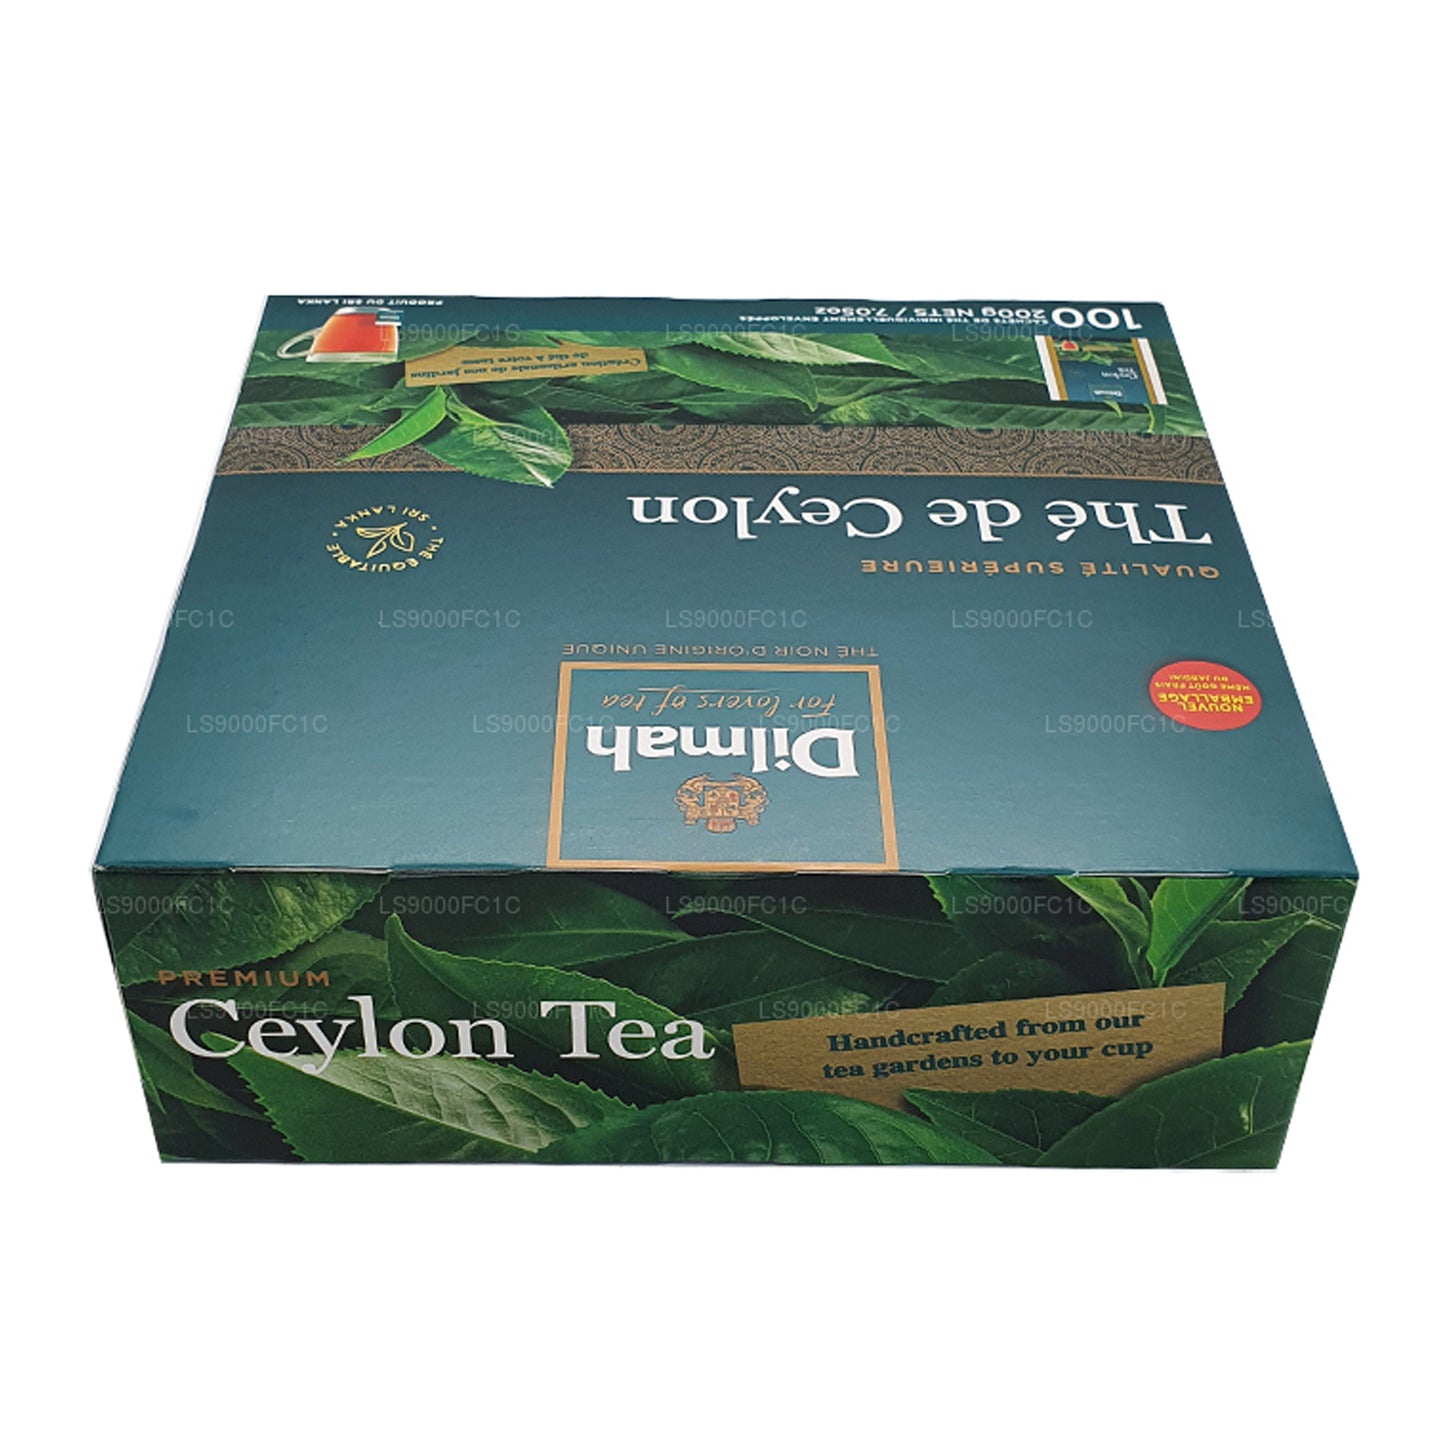 Dilmah Premium Ceylon Tea, pakowane pojedynczo 100 torebek (200g)